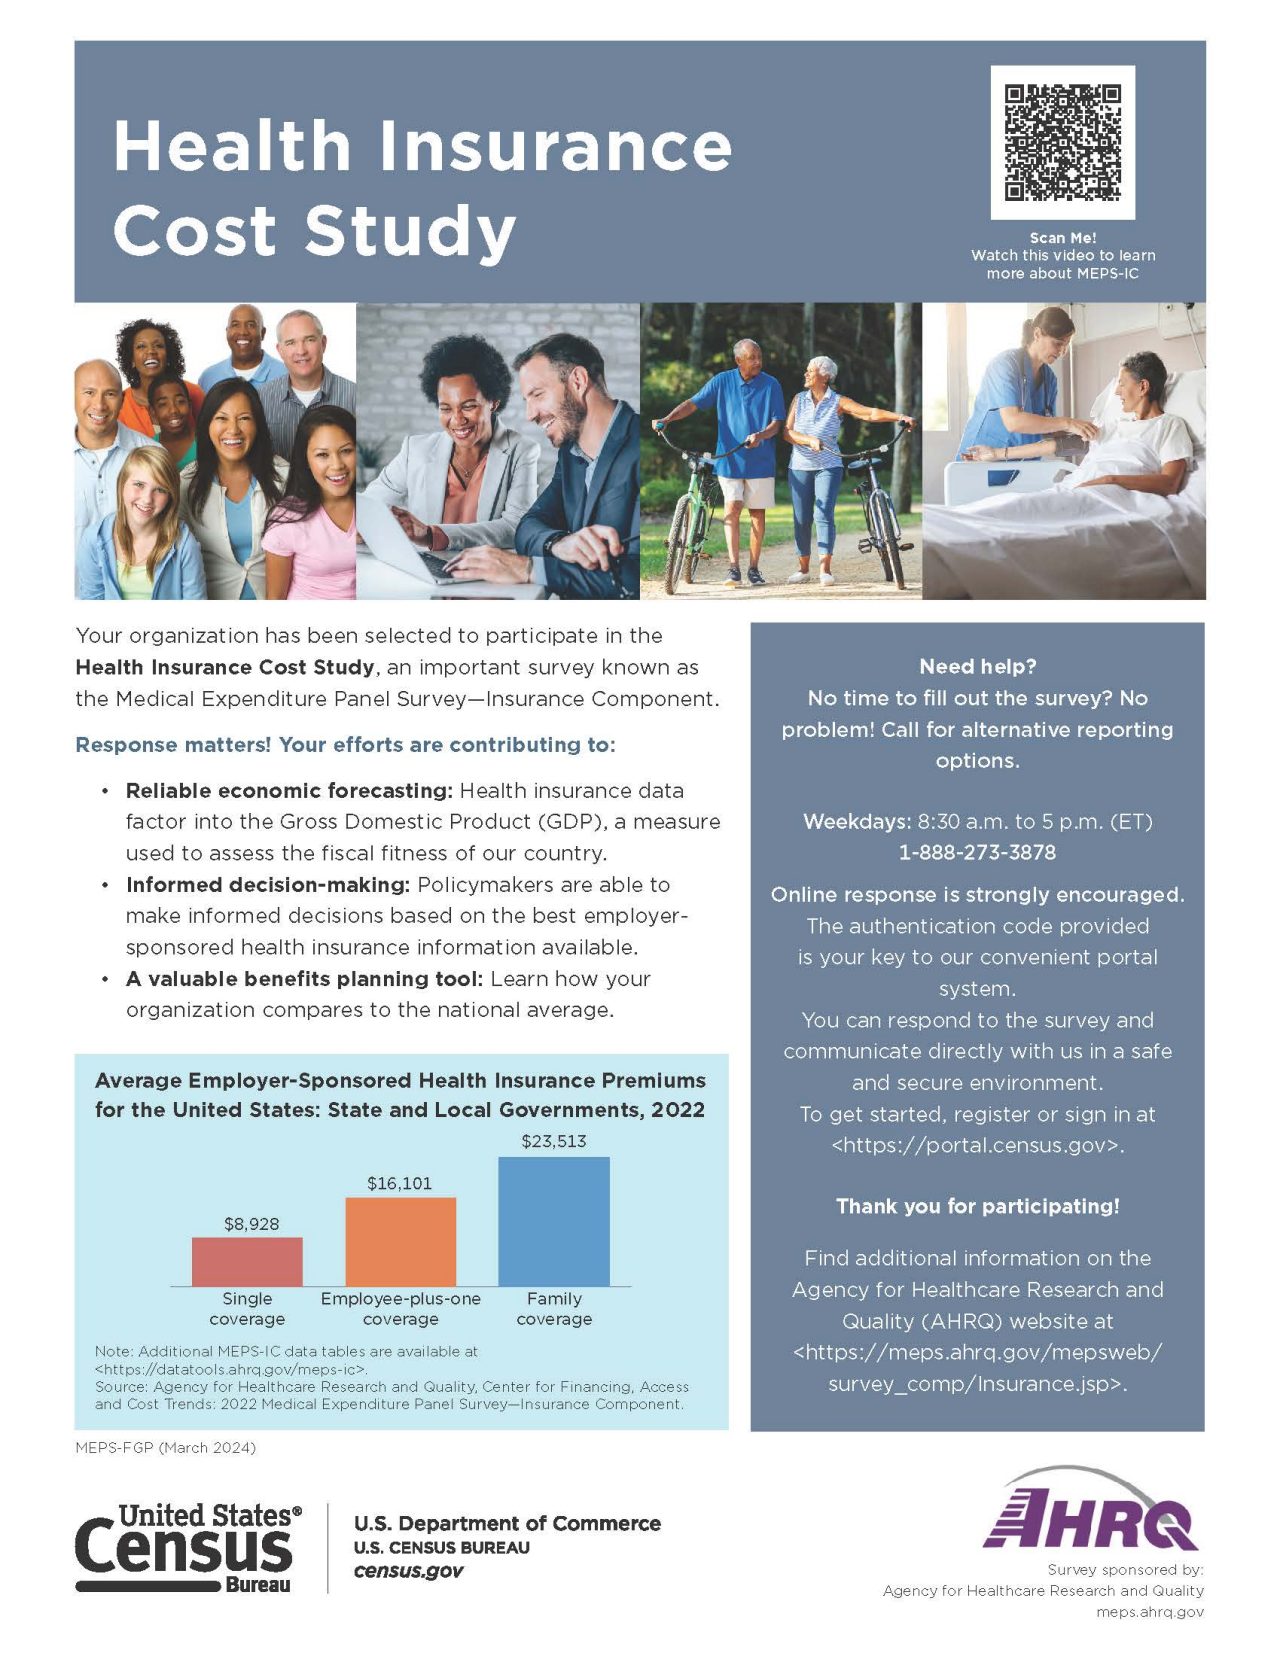 Health Insurance Cost Study - Public Sector Factsheet 